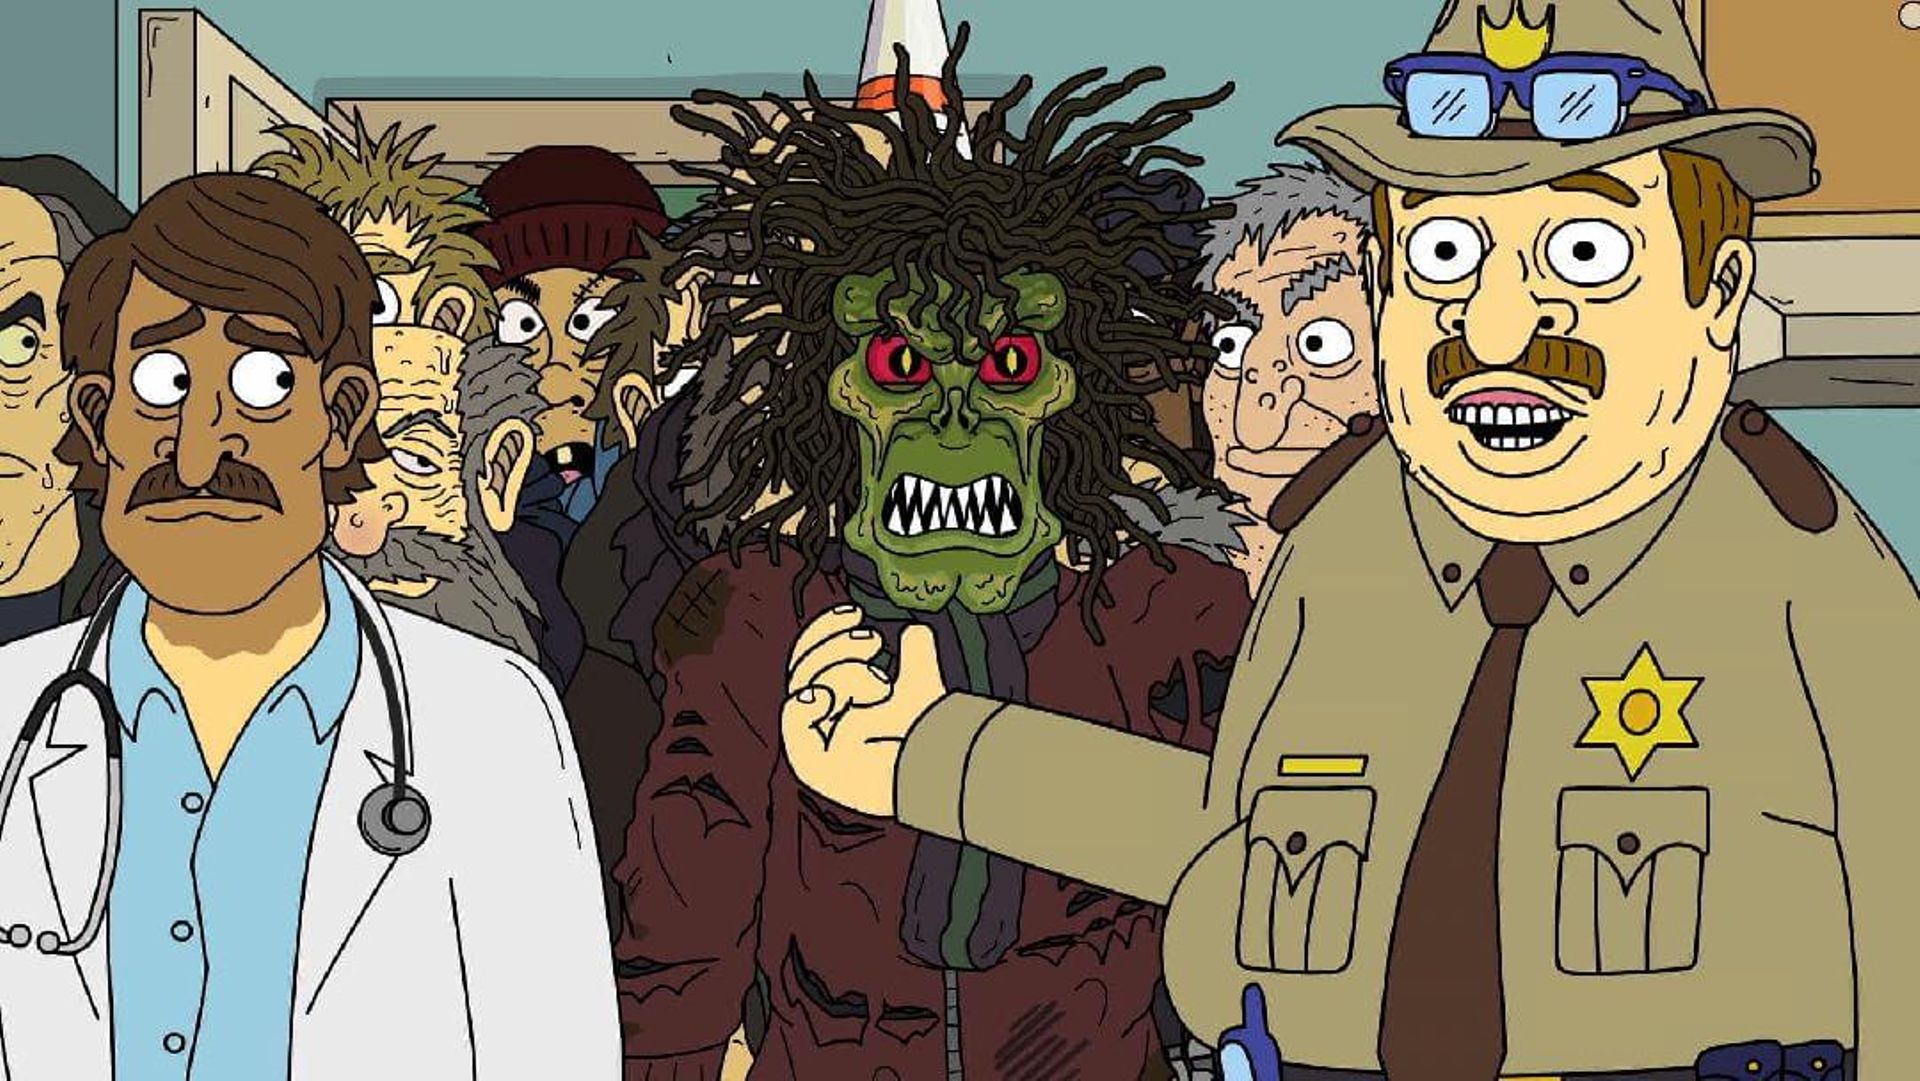 Mr. Pickles: Season 3, Episode 4 - Rotten Tomatoes